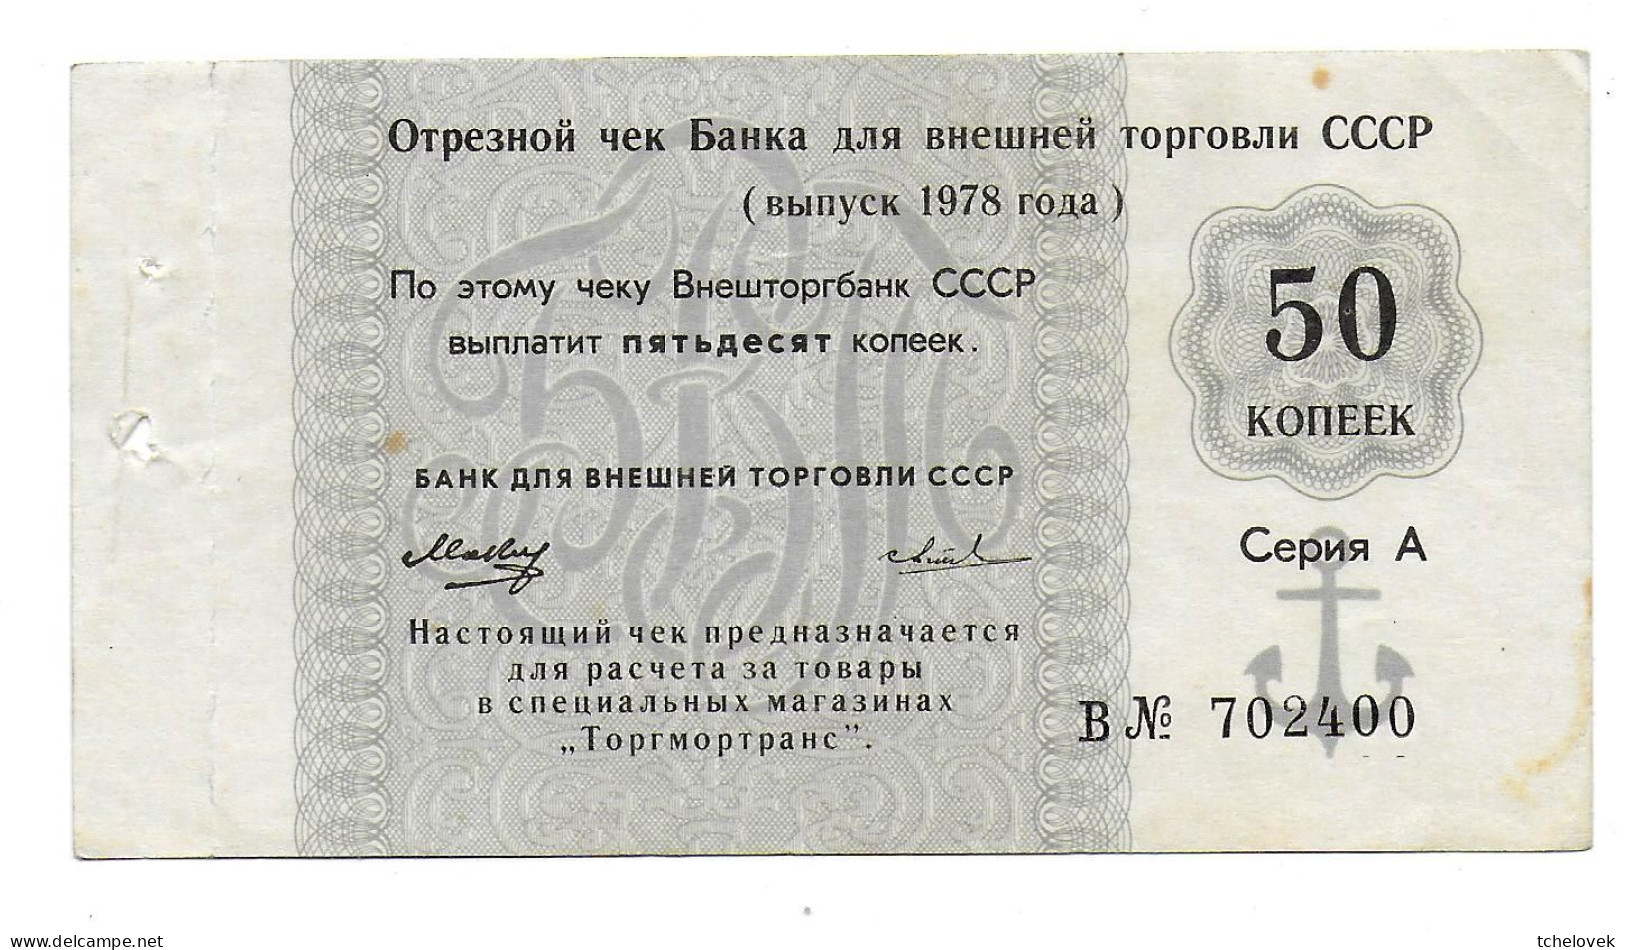 (Billets).Russie Russia USSR Vneshposiltorg Vneshtorgbank 50K 1978 Ancre Serie V N° 702400. Foreign Exchange Certificate - Russia